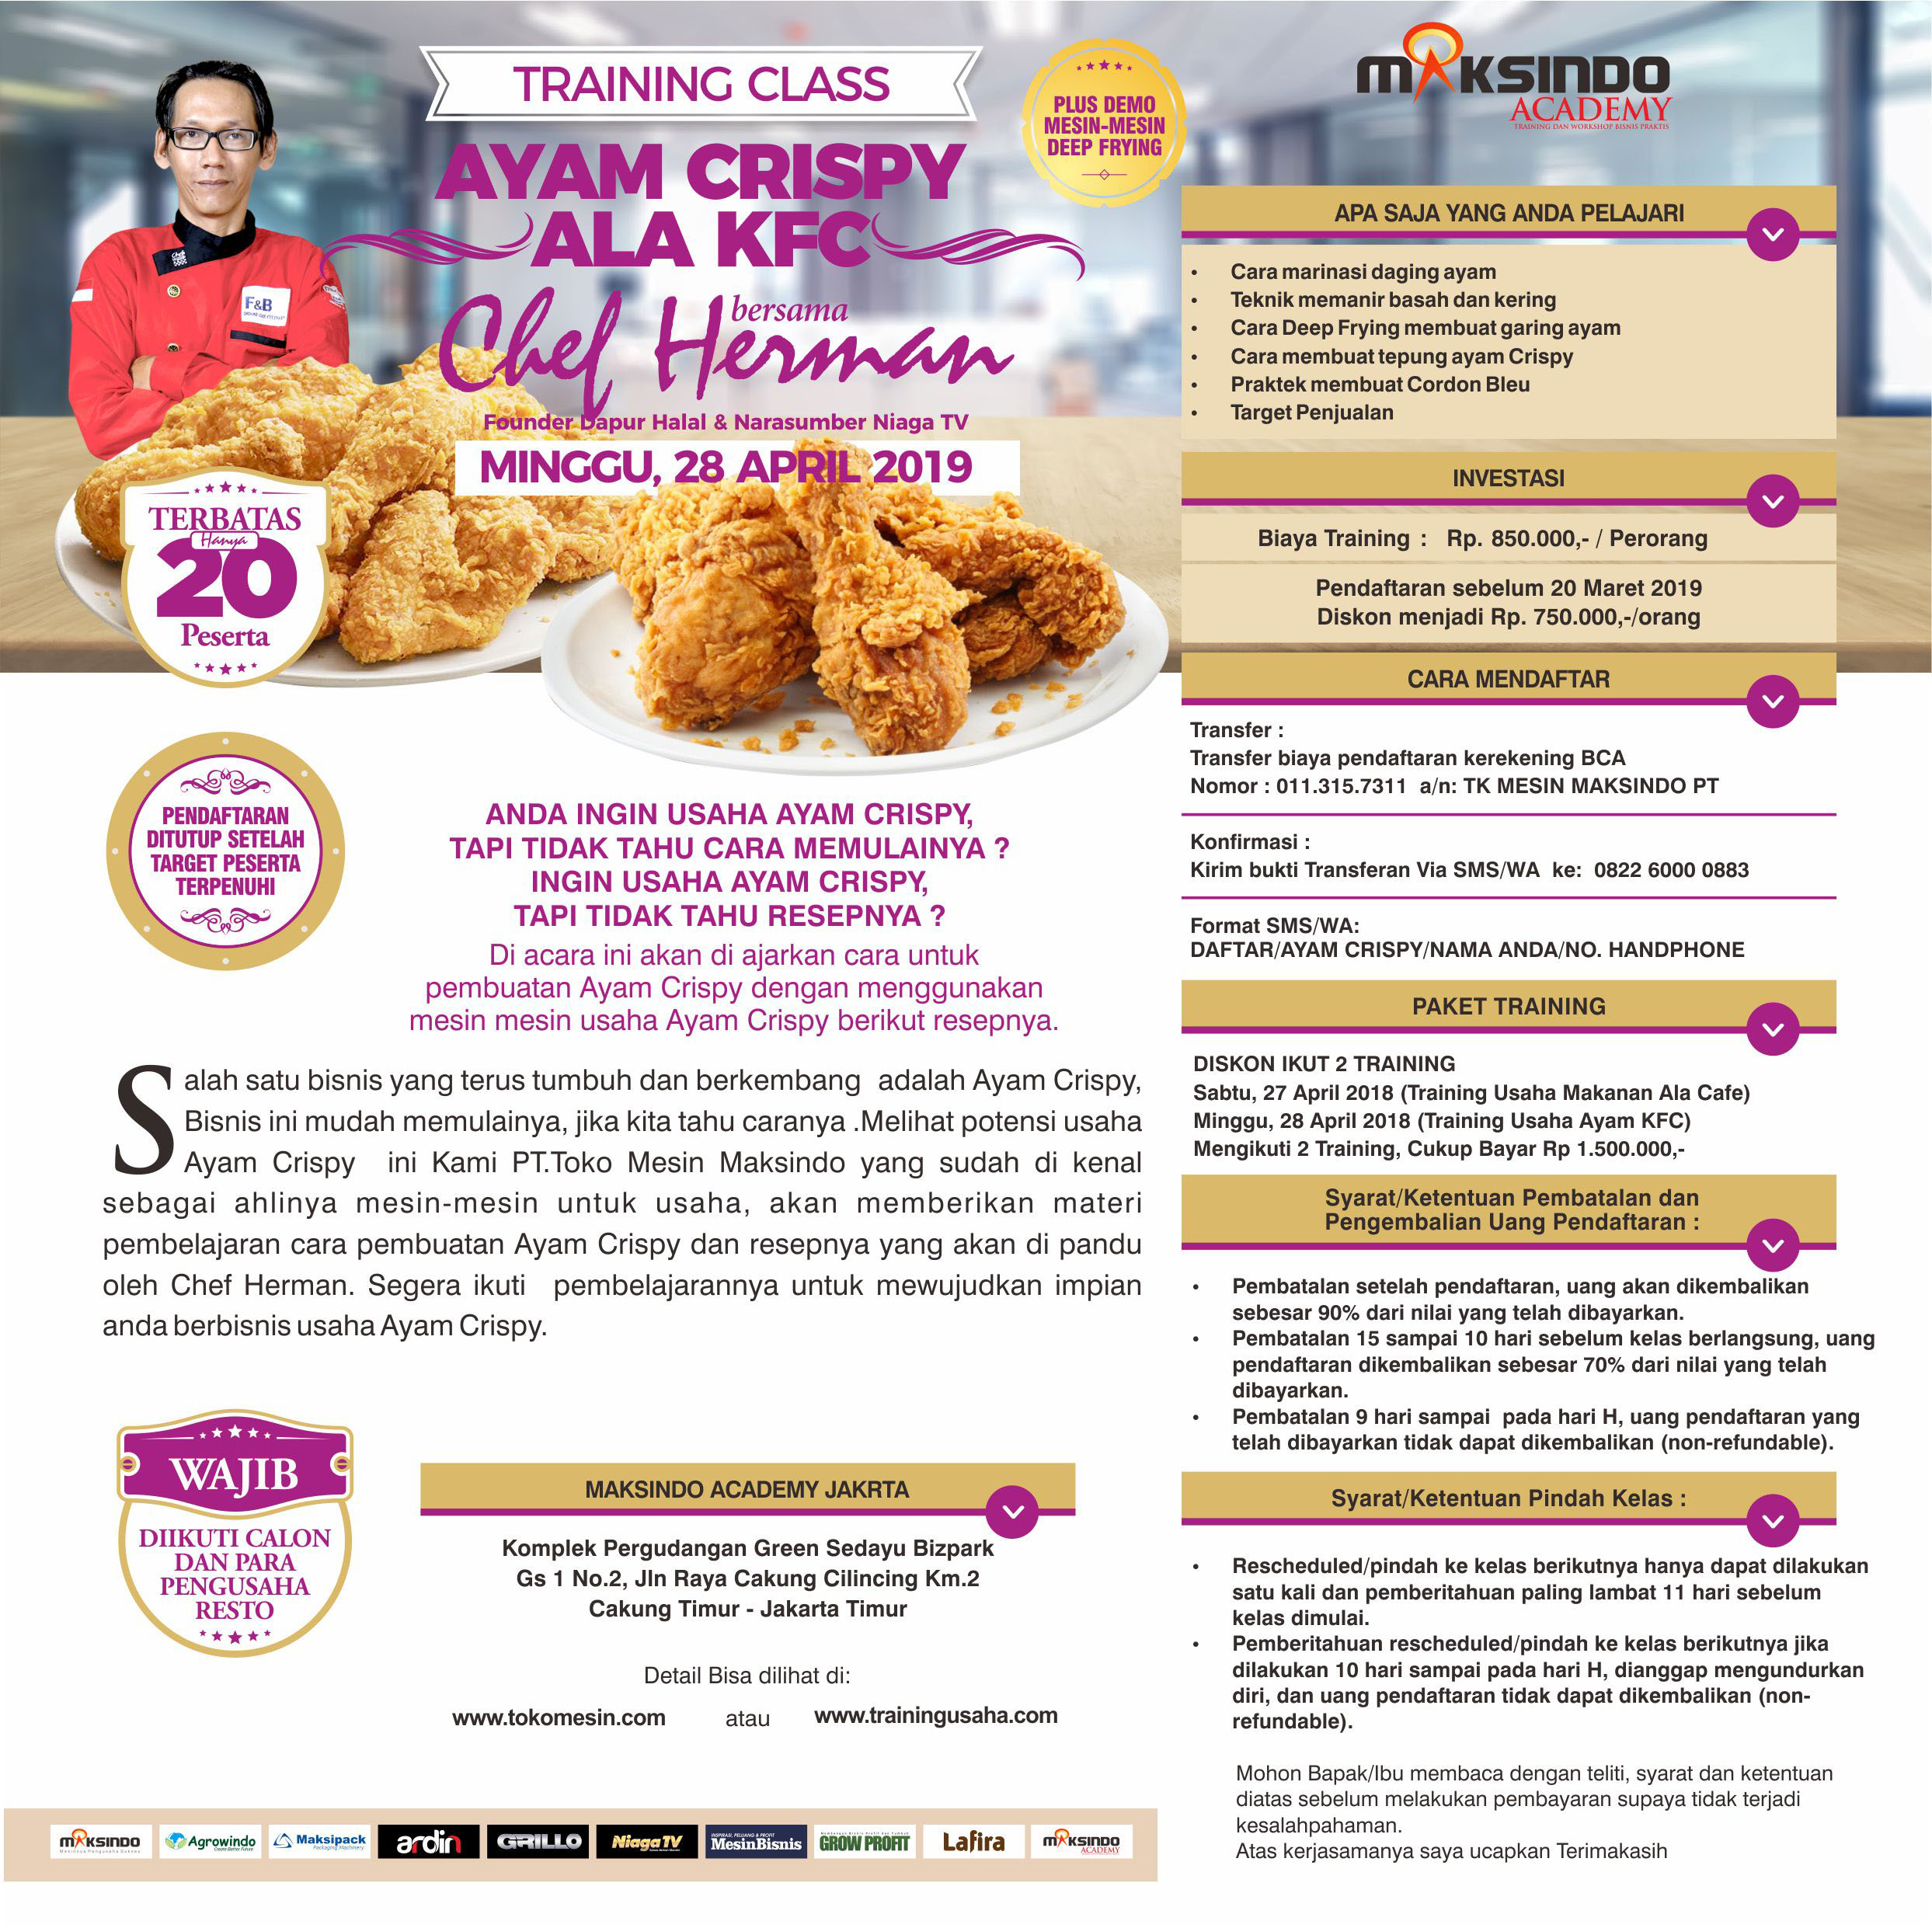 Training Class Ayam Crispy Ala KFC, Sabtu 28 April 2019